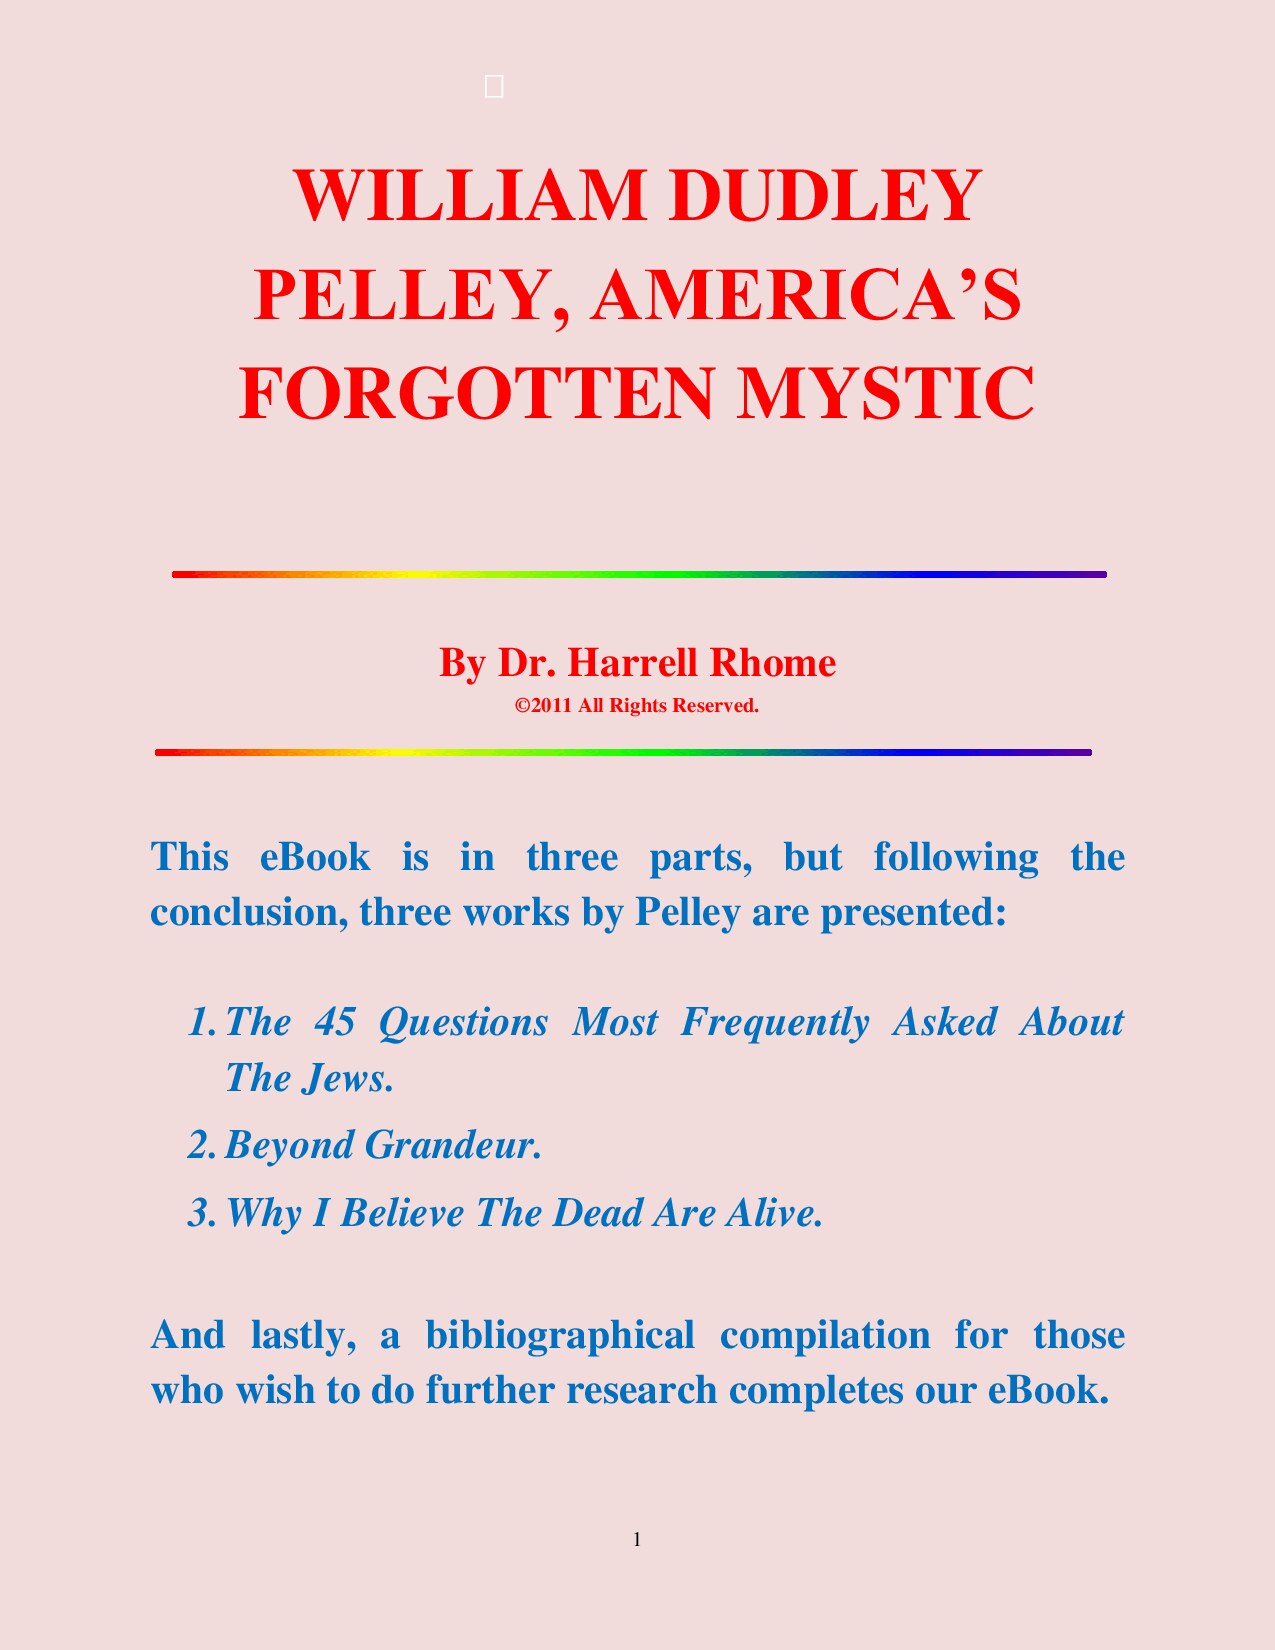 William Dudley Pelley - America's Forgotten Mystic